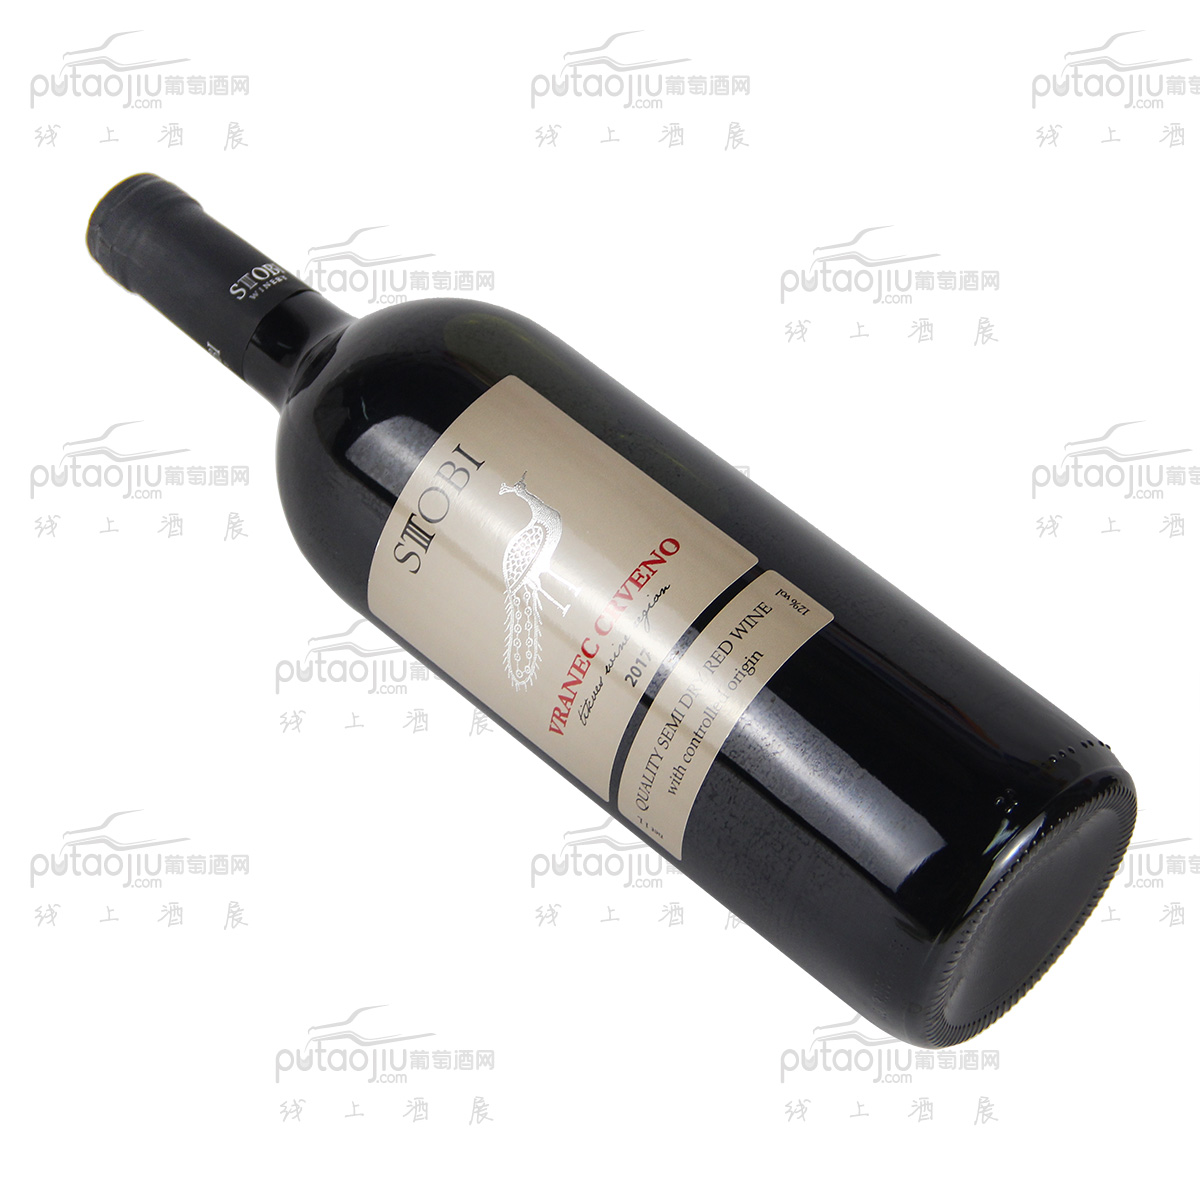 STOBI斯多比酒庄(VRANEC CRVENO)韵丽卡威罗A级半干红葡萄酒小众国家原装进口北马其顿红酒